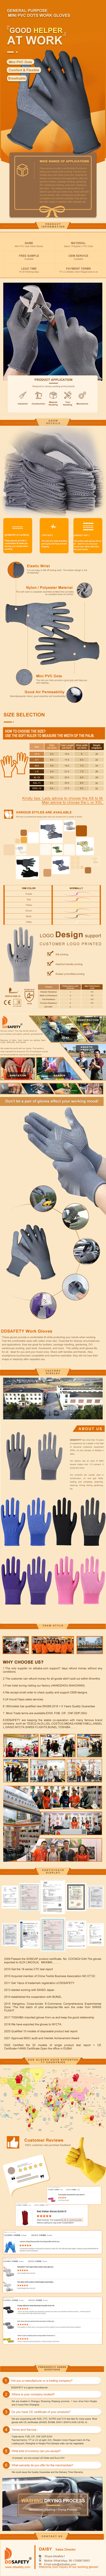 Gloves for Professionals Worker Gloves - Skin Tight Nylon Knit Durable Gloves, Non-Slip mini dots on palm-DKP415 Gloves for Professionals Worker Gloves - Skin Tight Nylon Knit Durable Gloves, Non-Slip mini dots on palm-DKP415 Professionals Worker Gloves,Gloves for Professionals Worker,Skin Tight Nylon Knit Durable Gloves,Hand protection gloves with non-Slip mini dots on palm